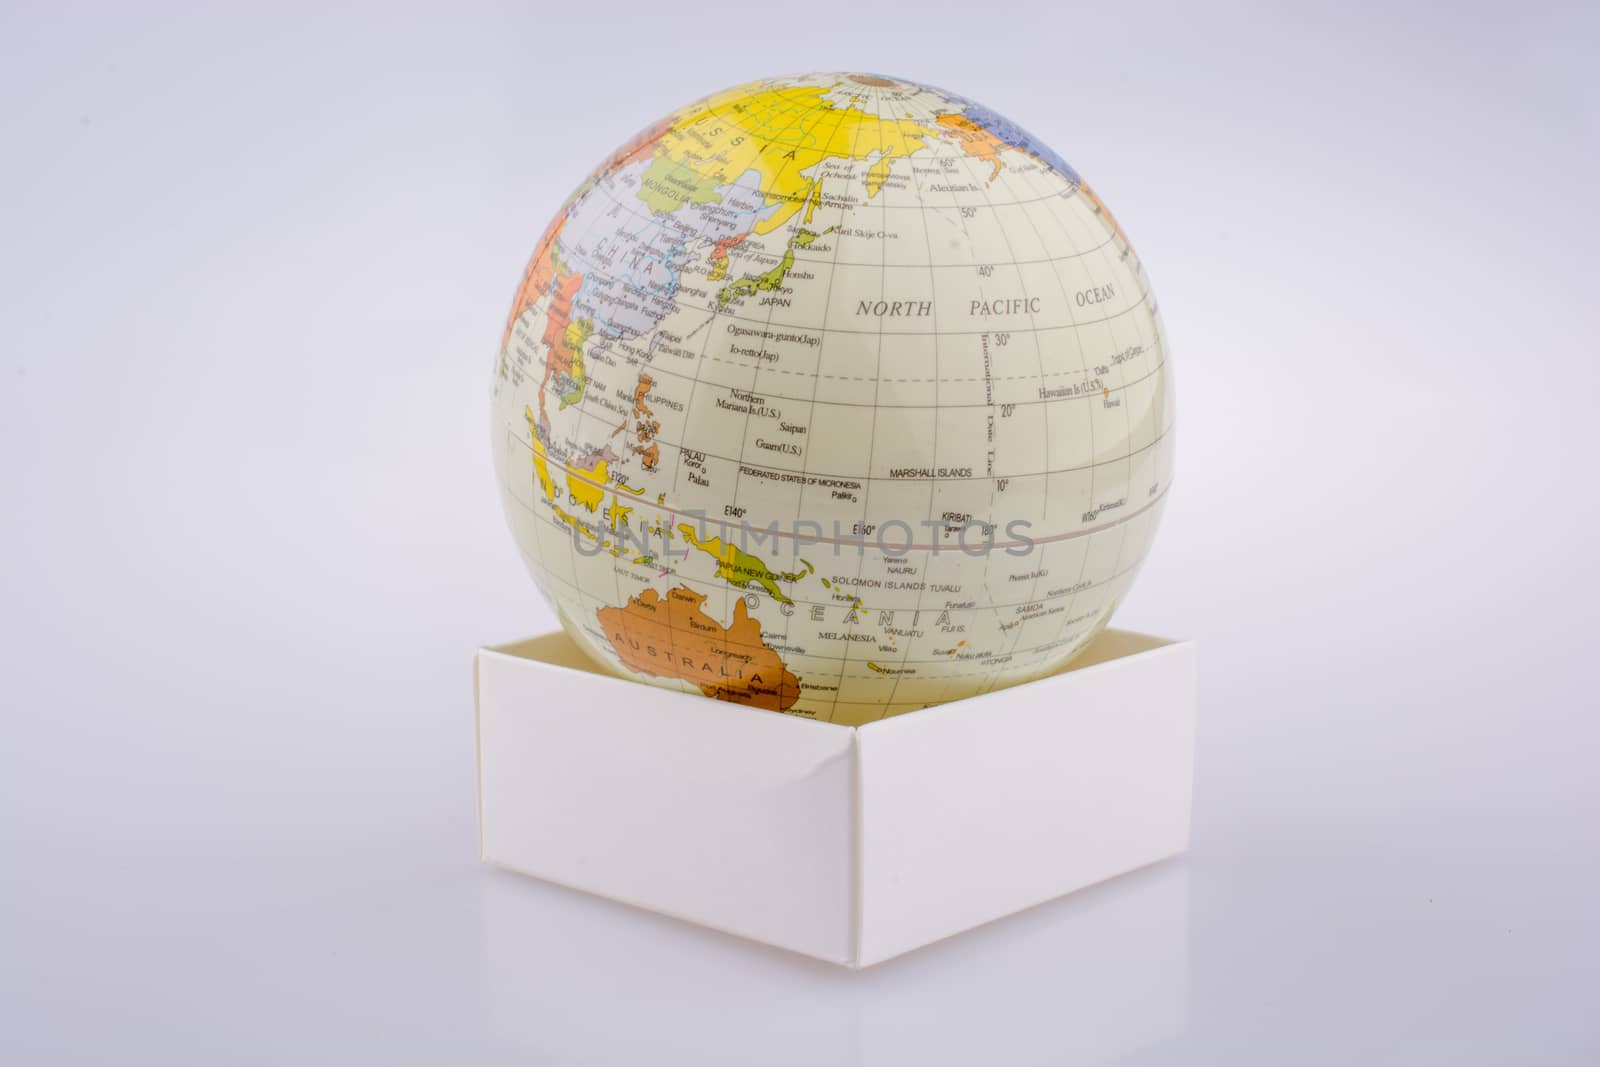 Little model globe put on a white box on a white background